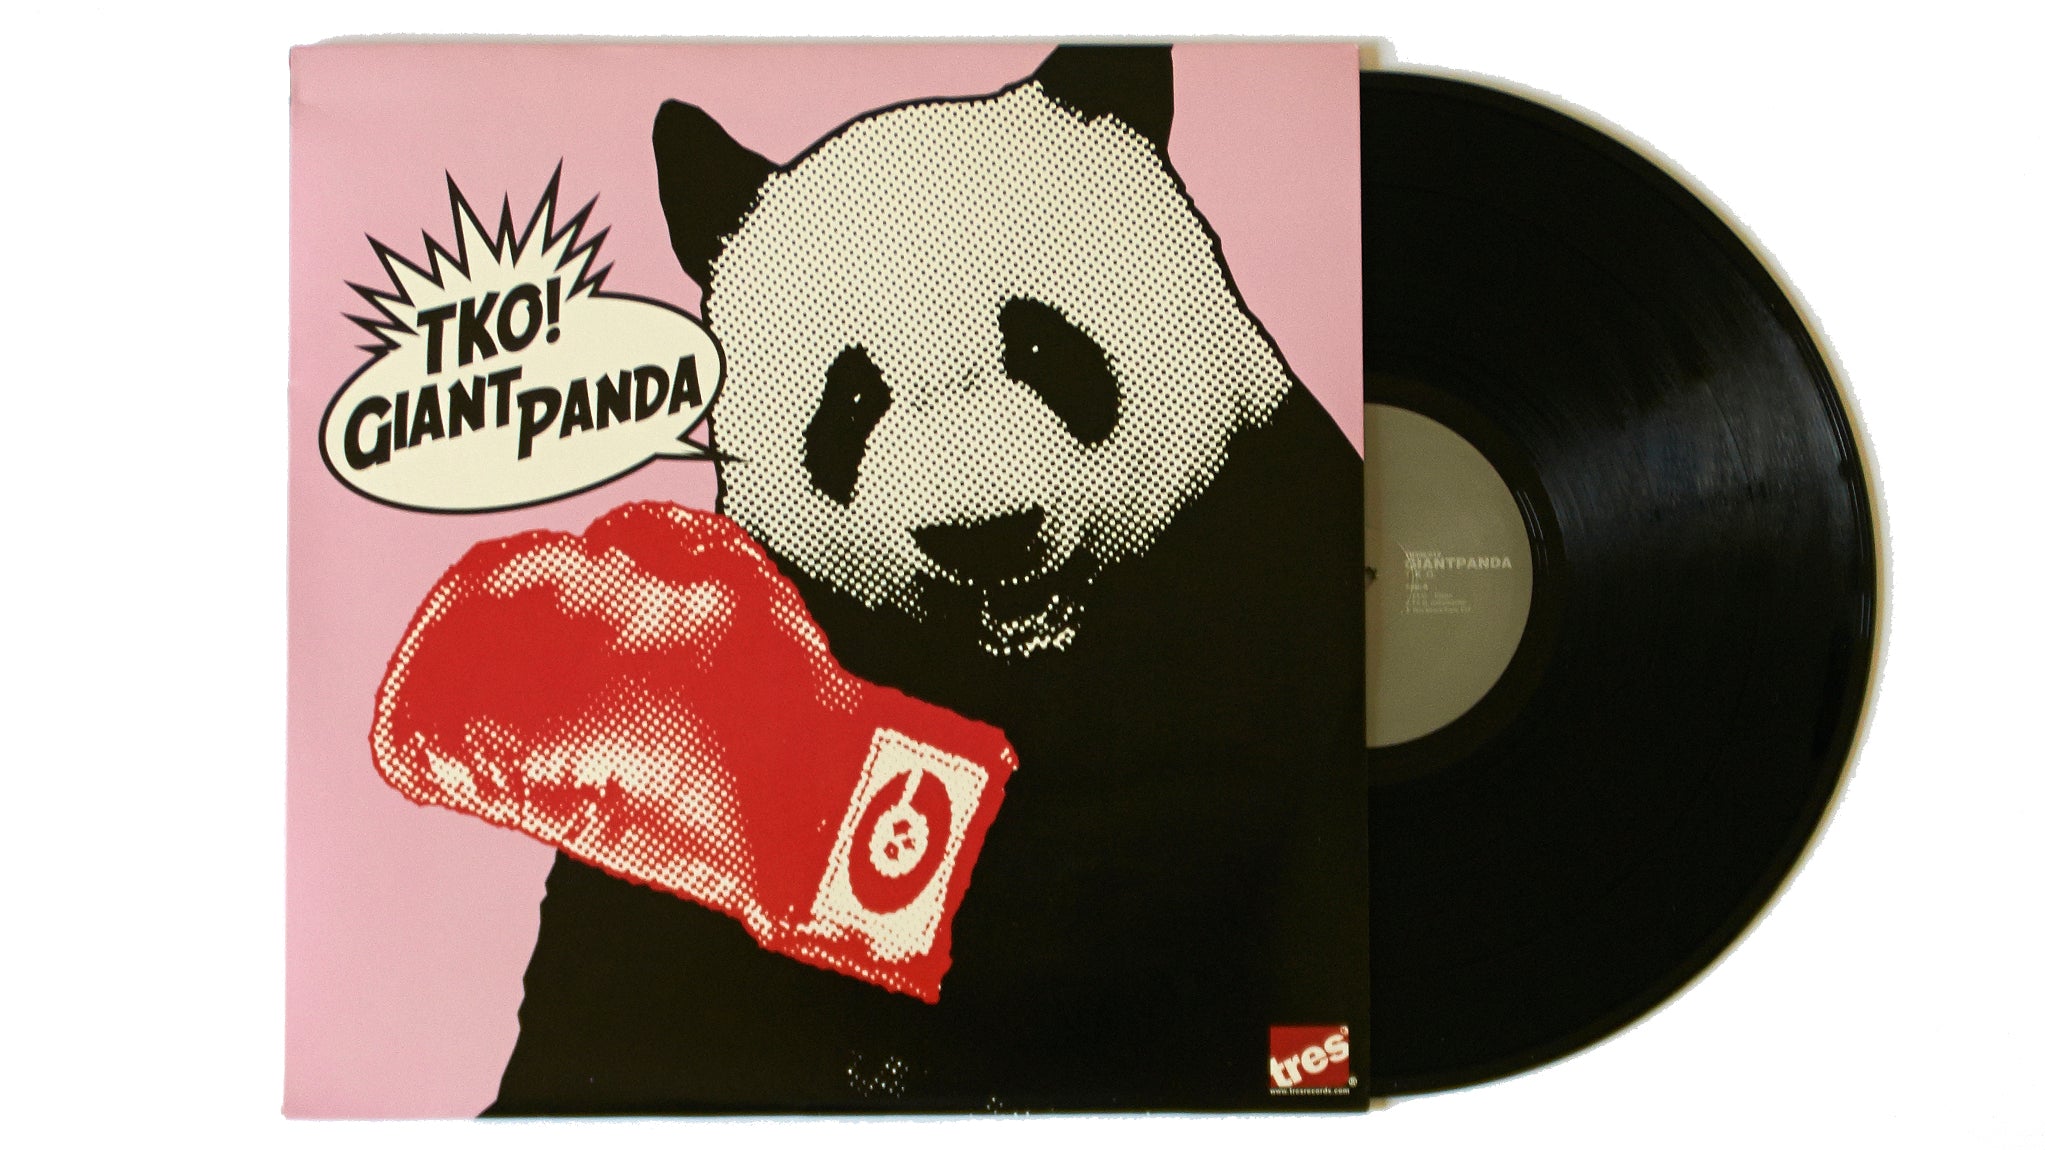 Giant Panda "TKO" (12")